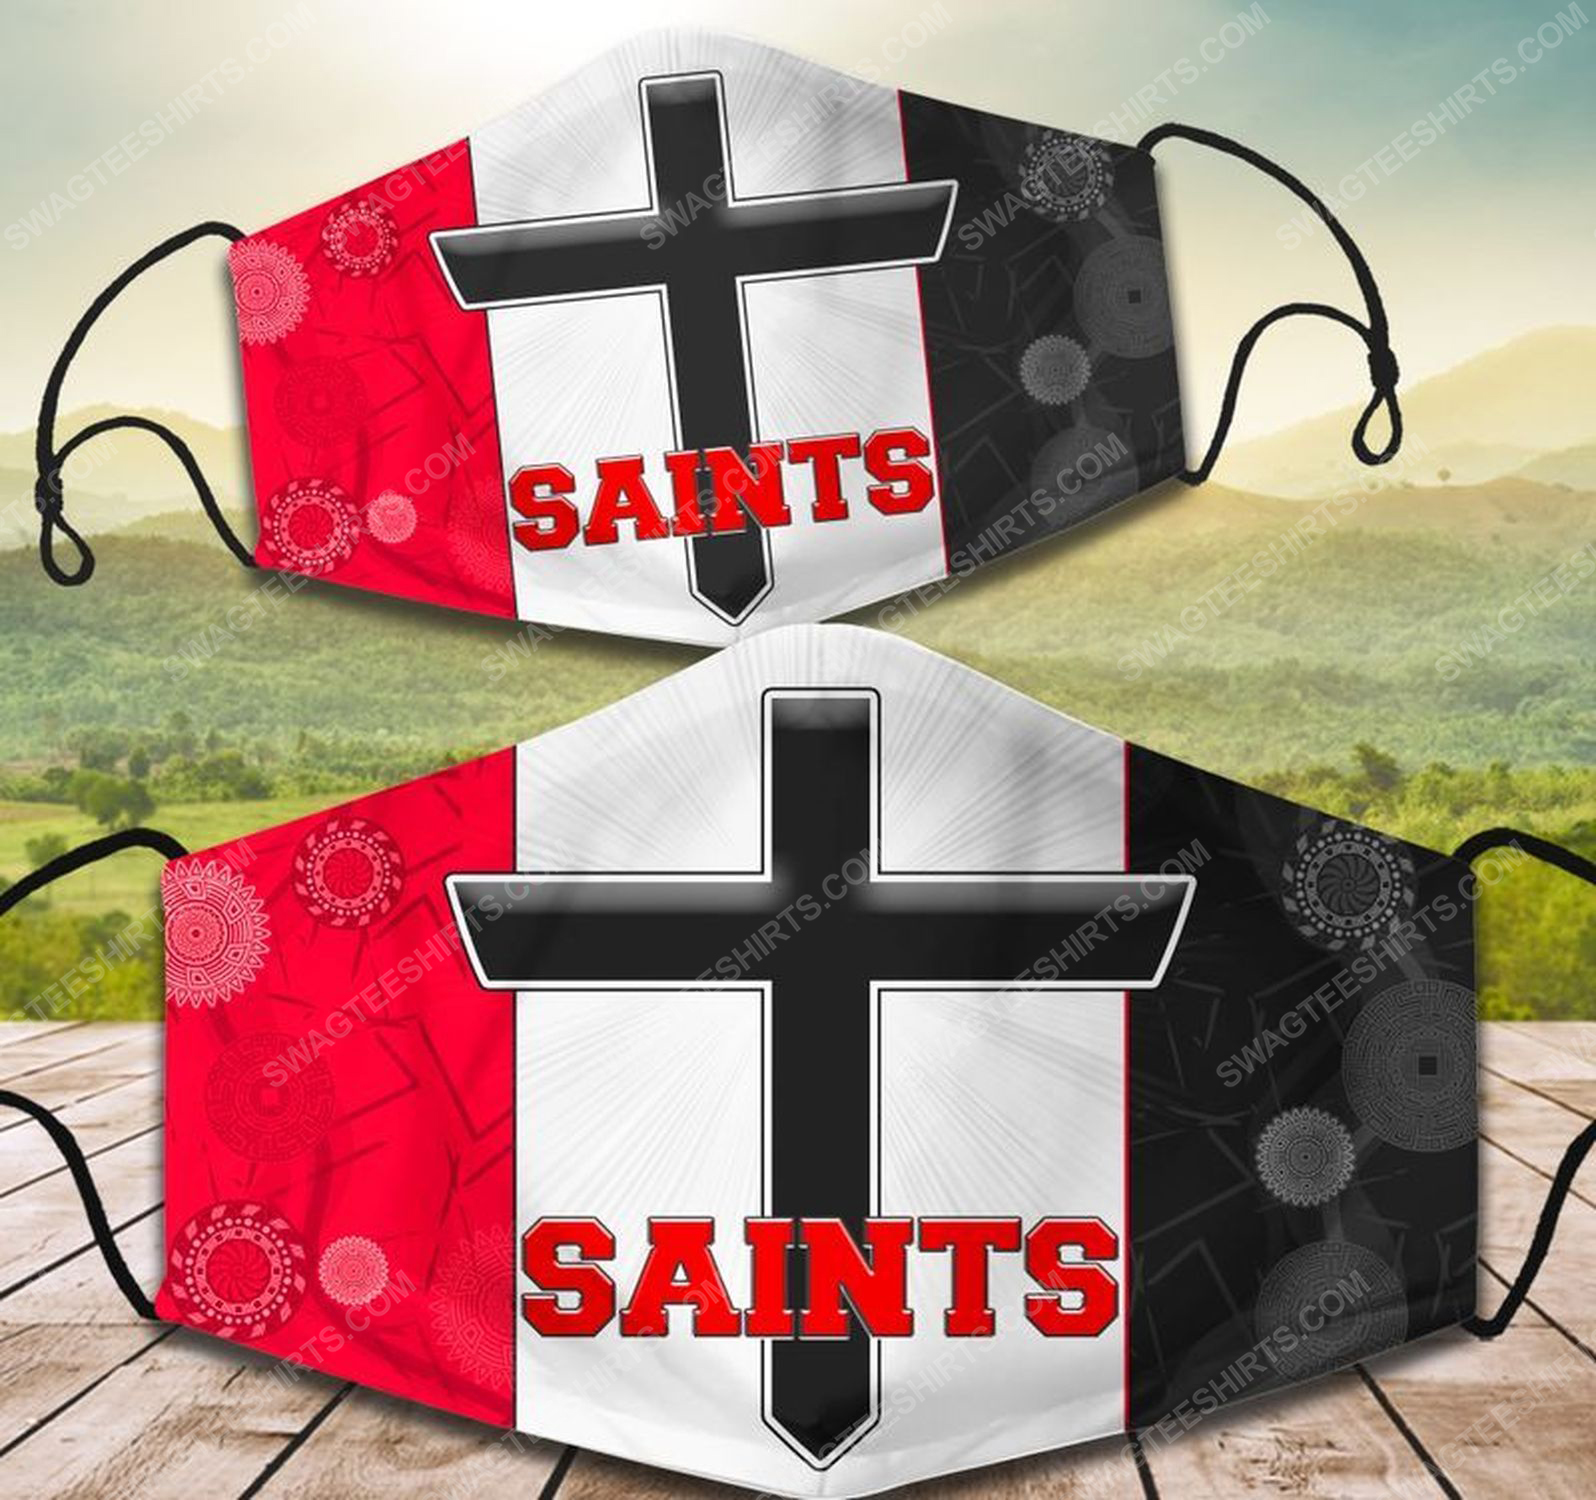 [special edition] Saints kilda football club face mask – maria